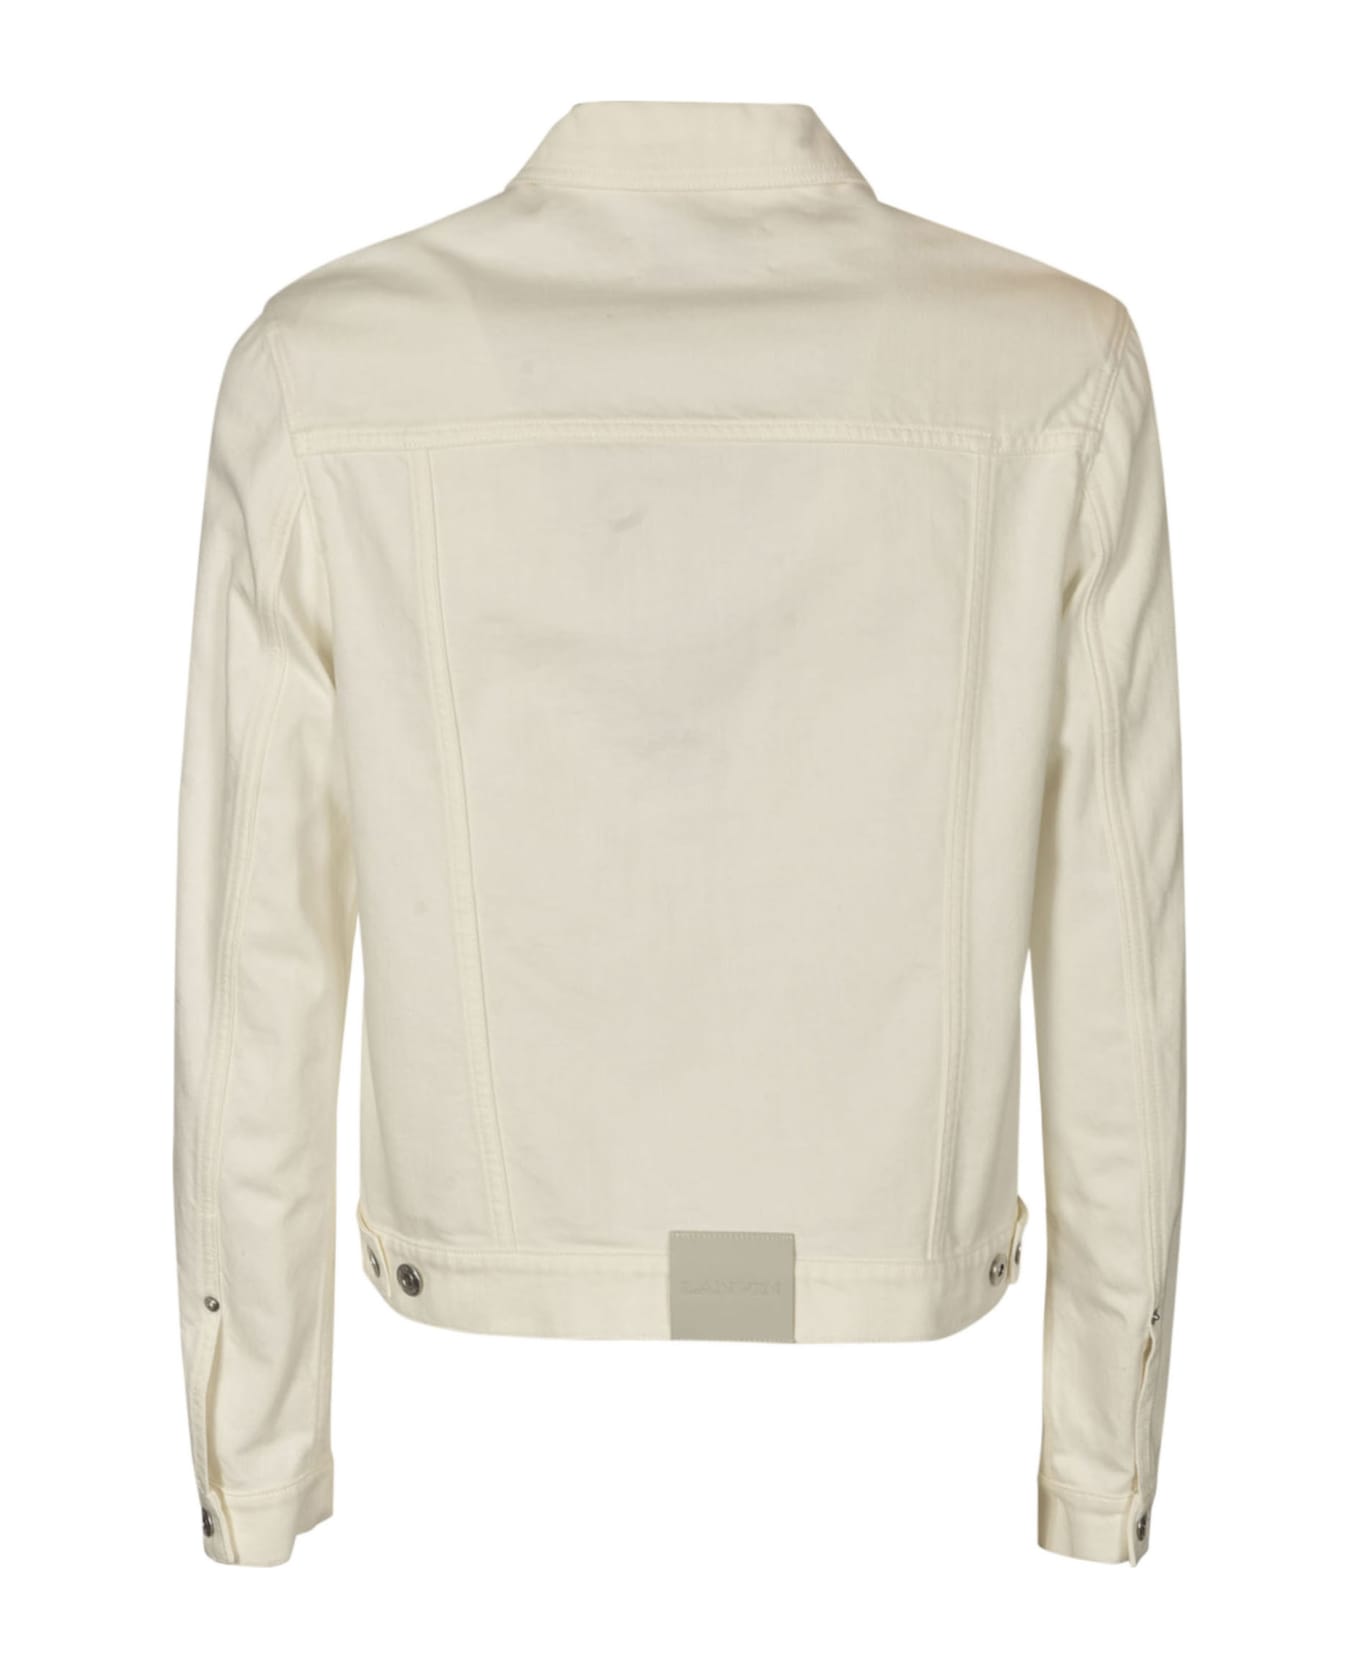 Lanvin Cropped Denim Jacket - Optic white ジャケット